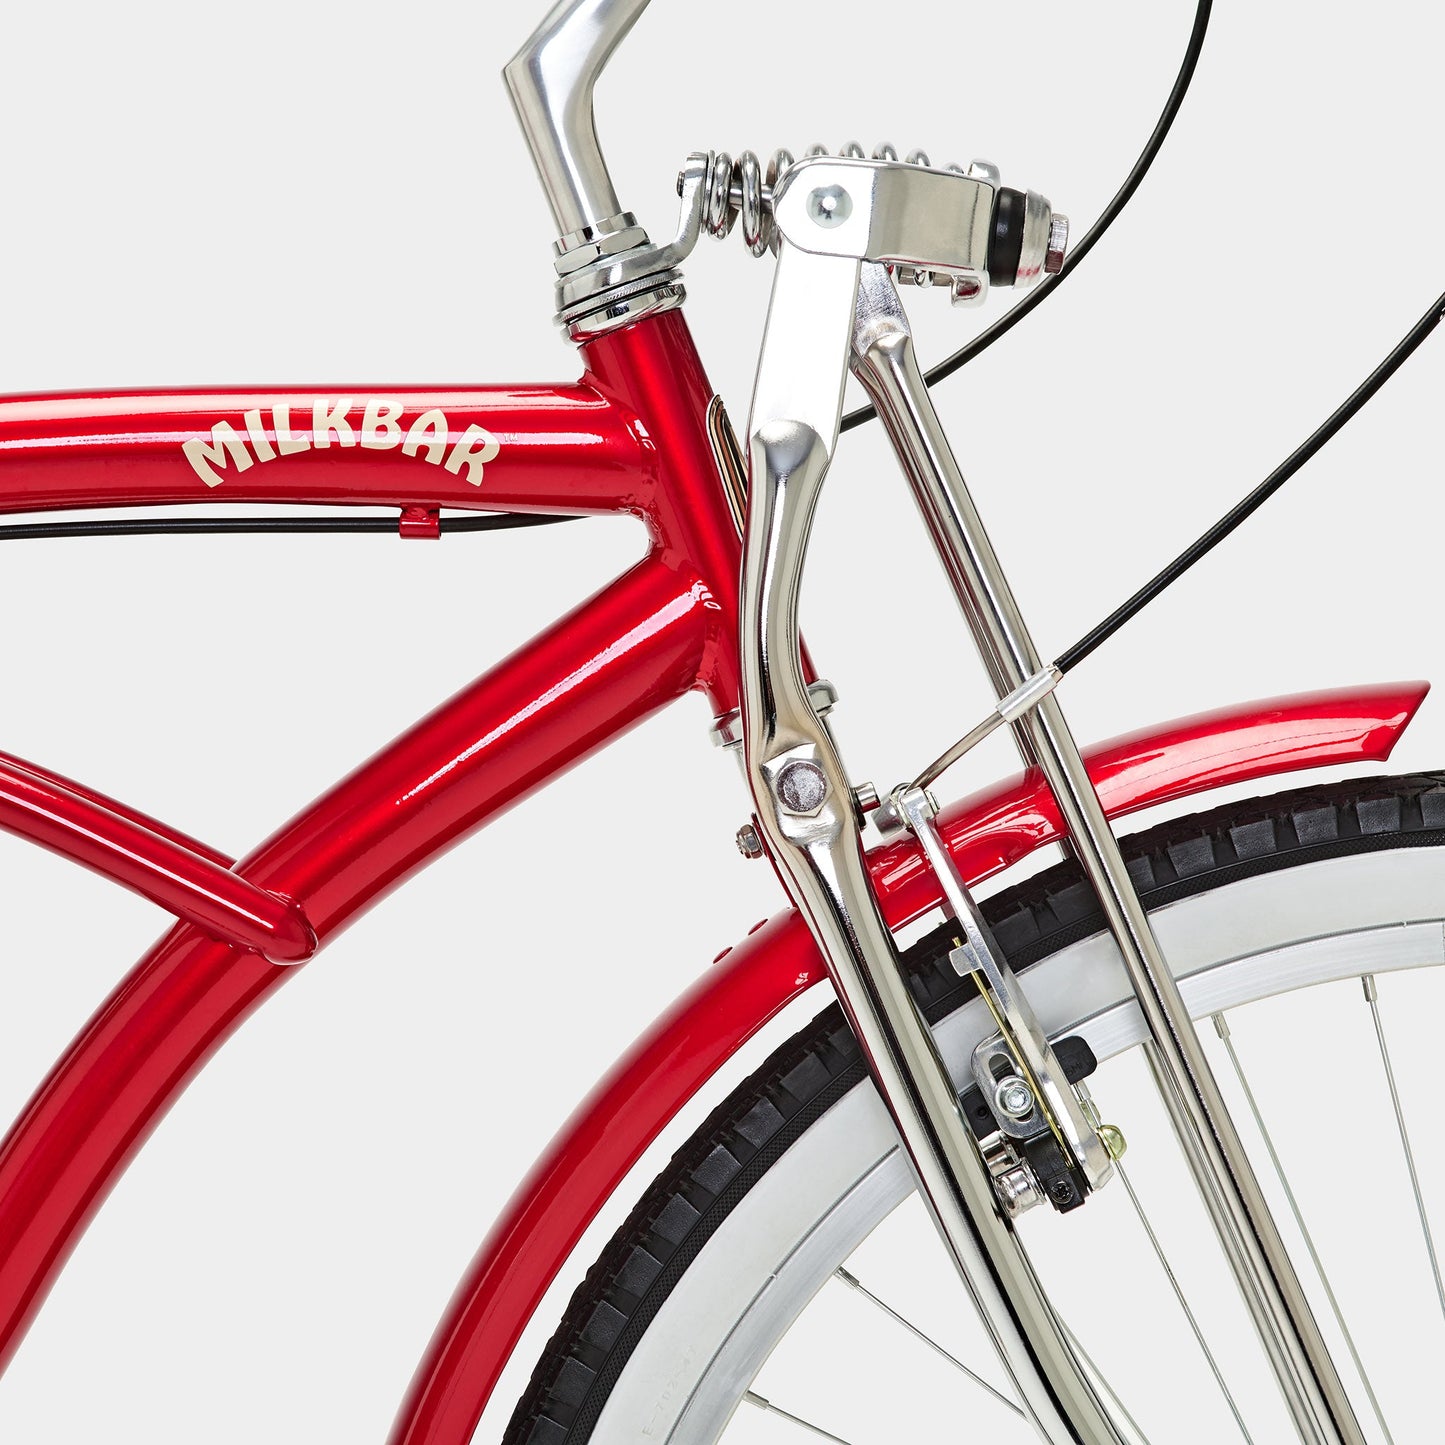 Front detailing of the Milkbar Bikes Sugar High 26" - Cherry Cola